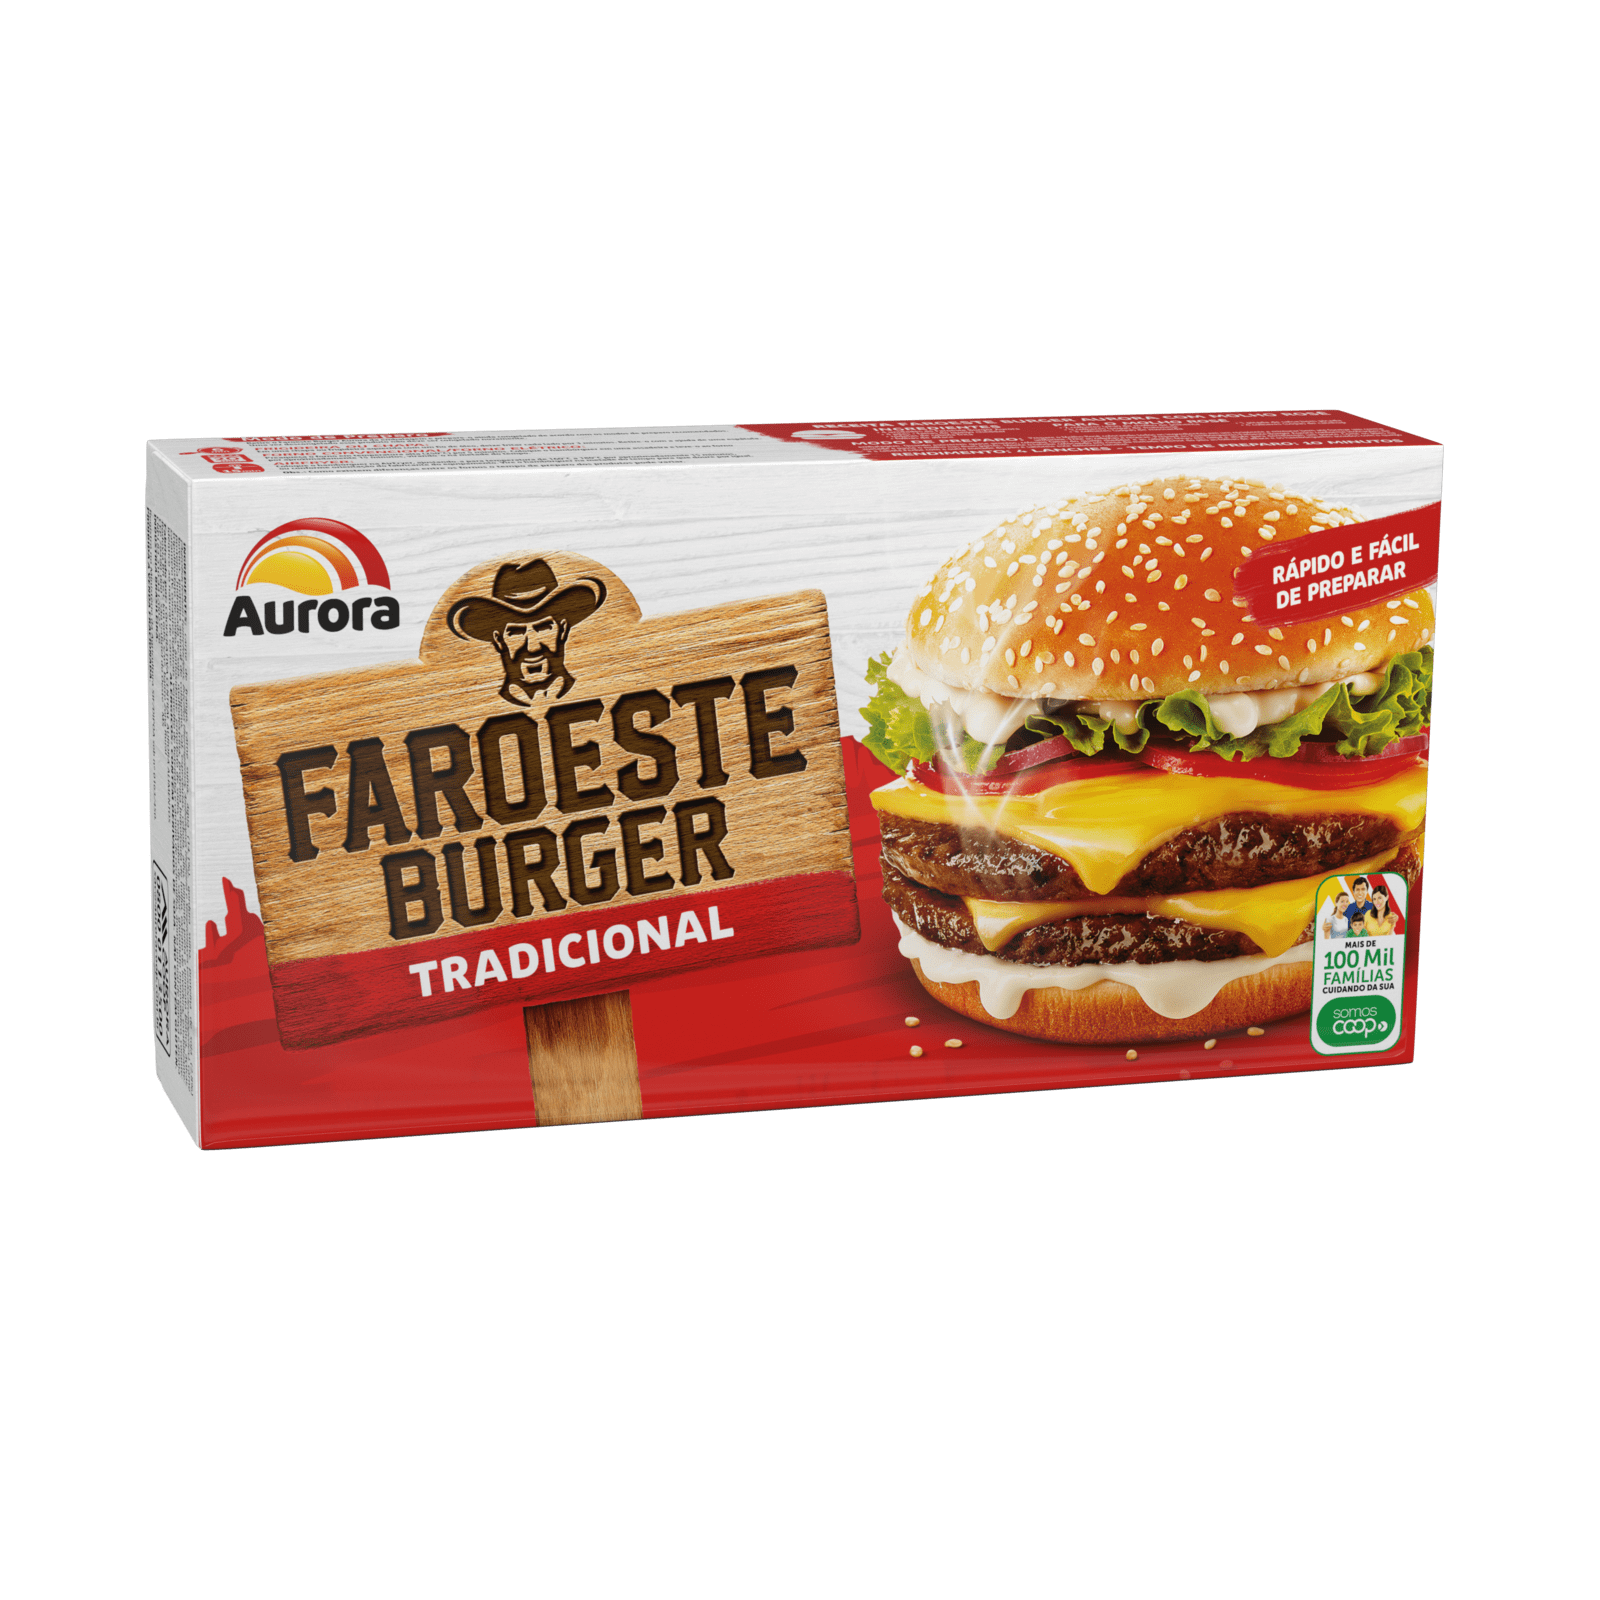 faroeste-burger-caixeta-aurora